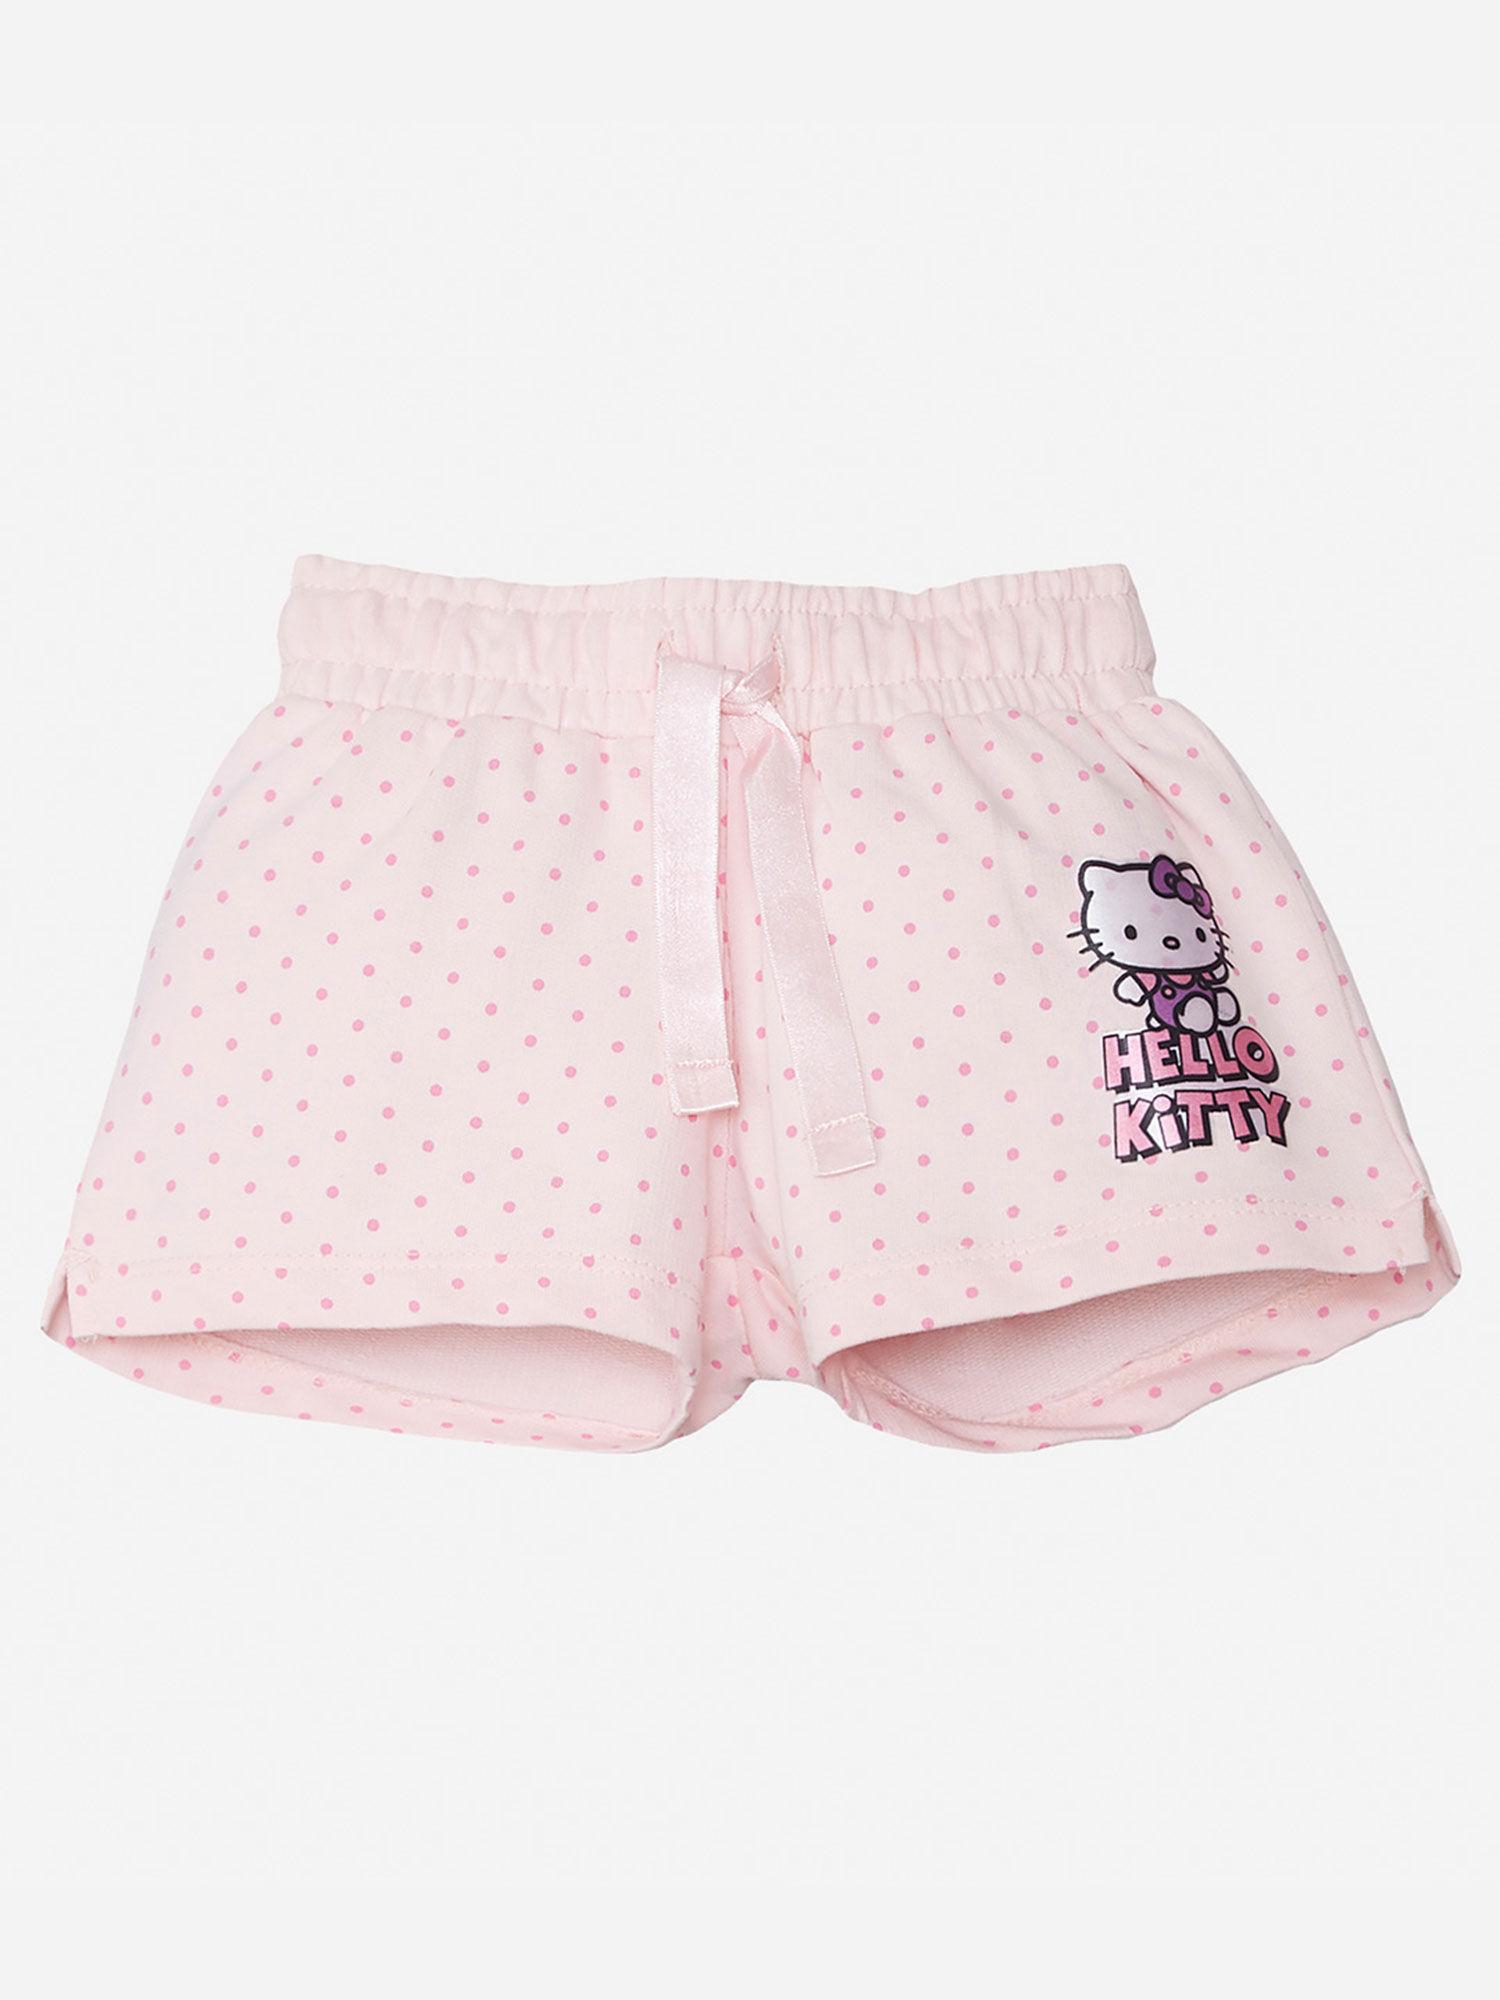 hello kitty pink shorts